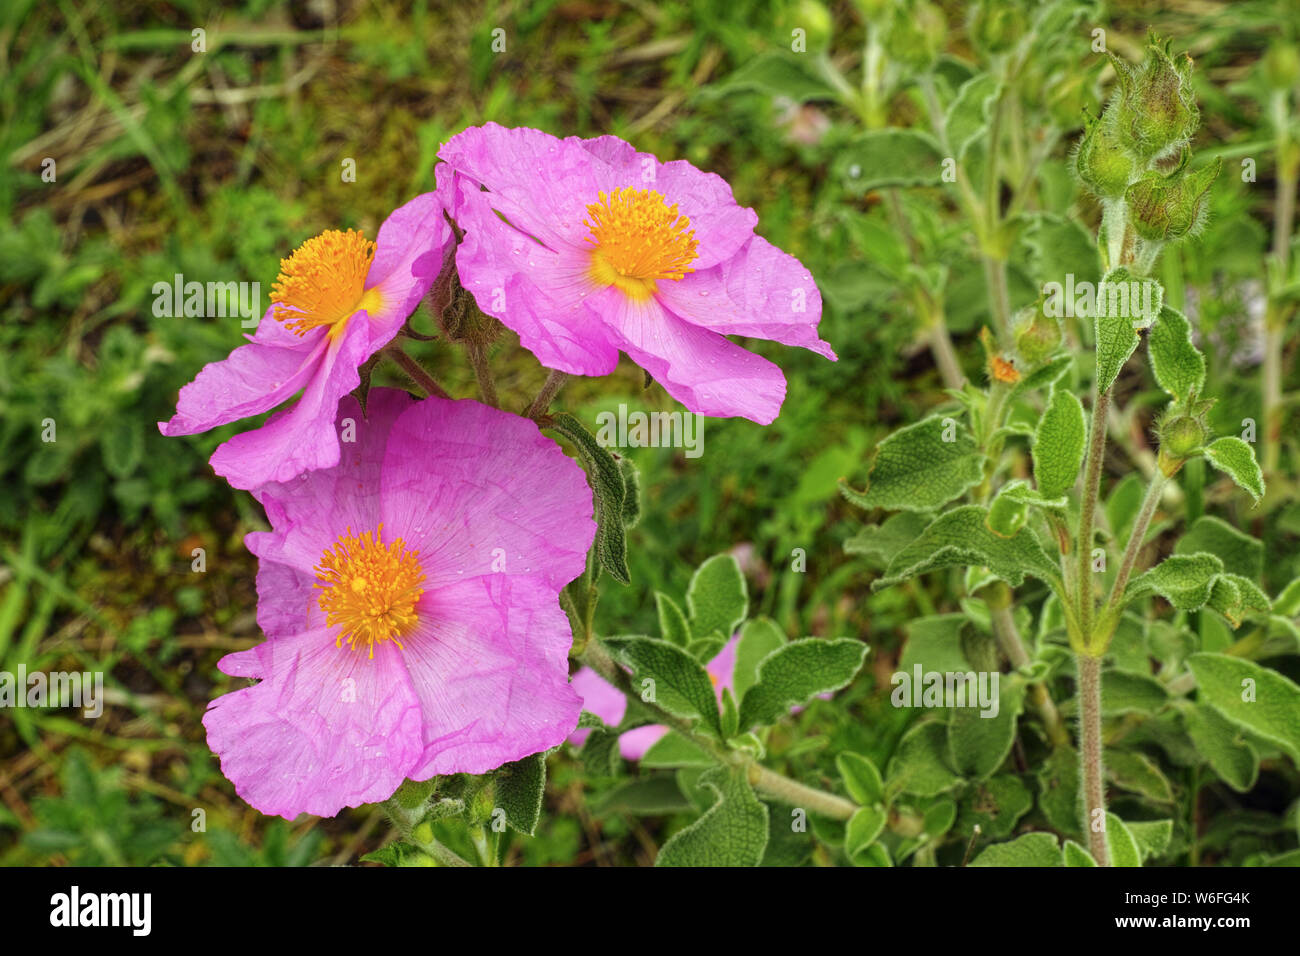 flowering plant of pink rock rose Stock Photo